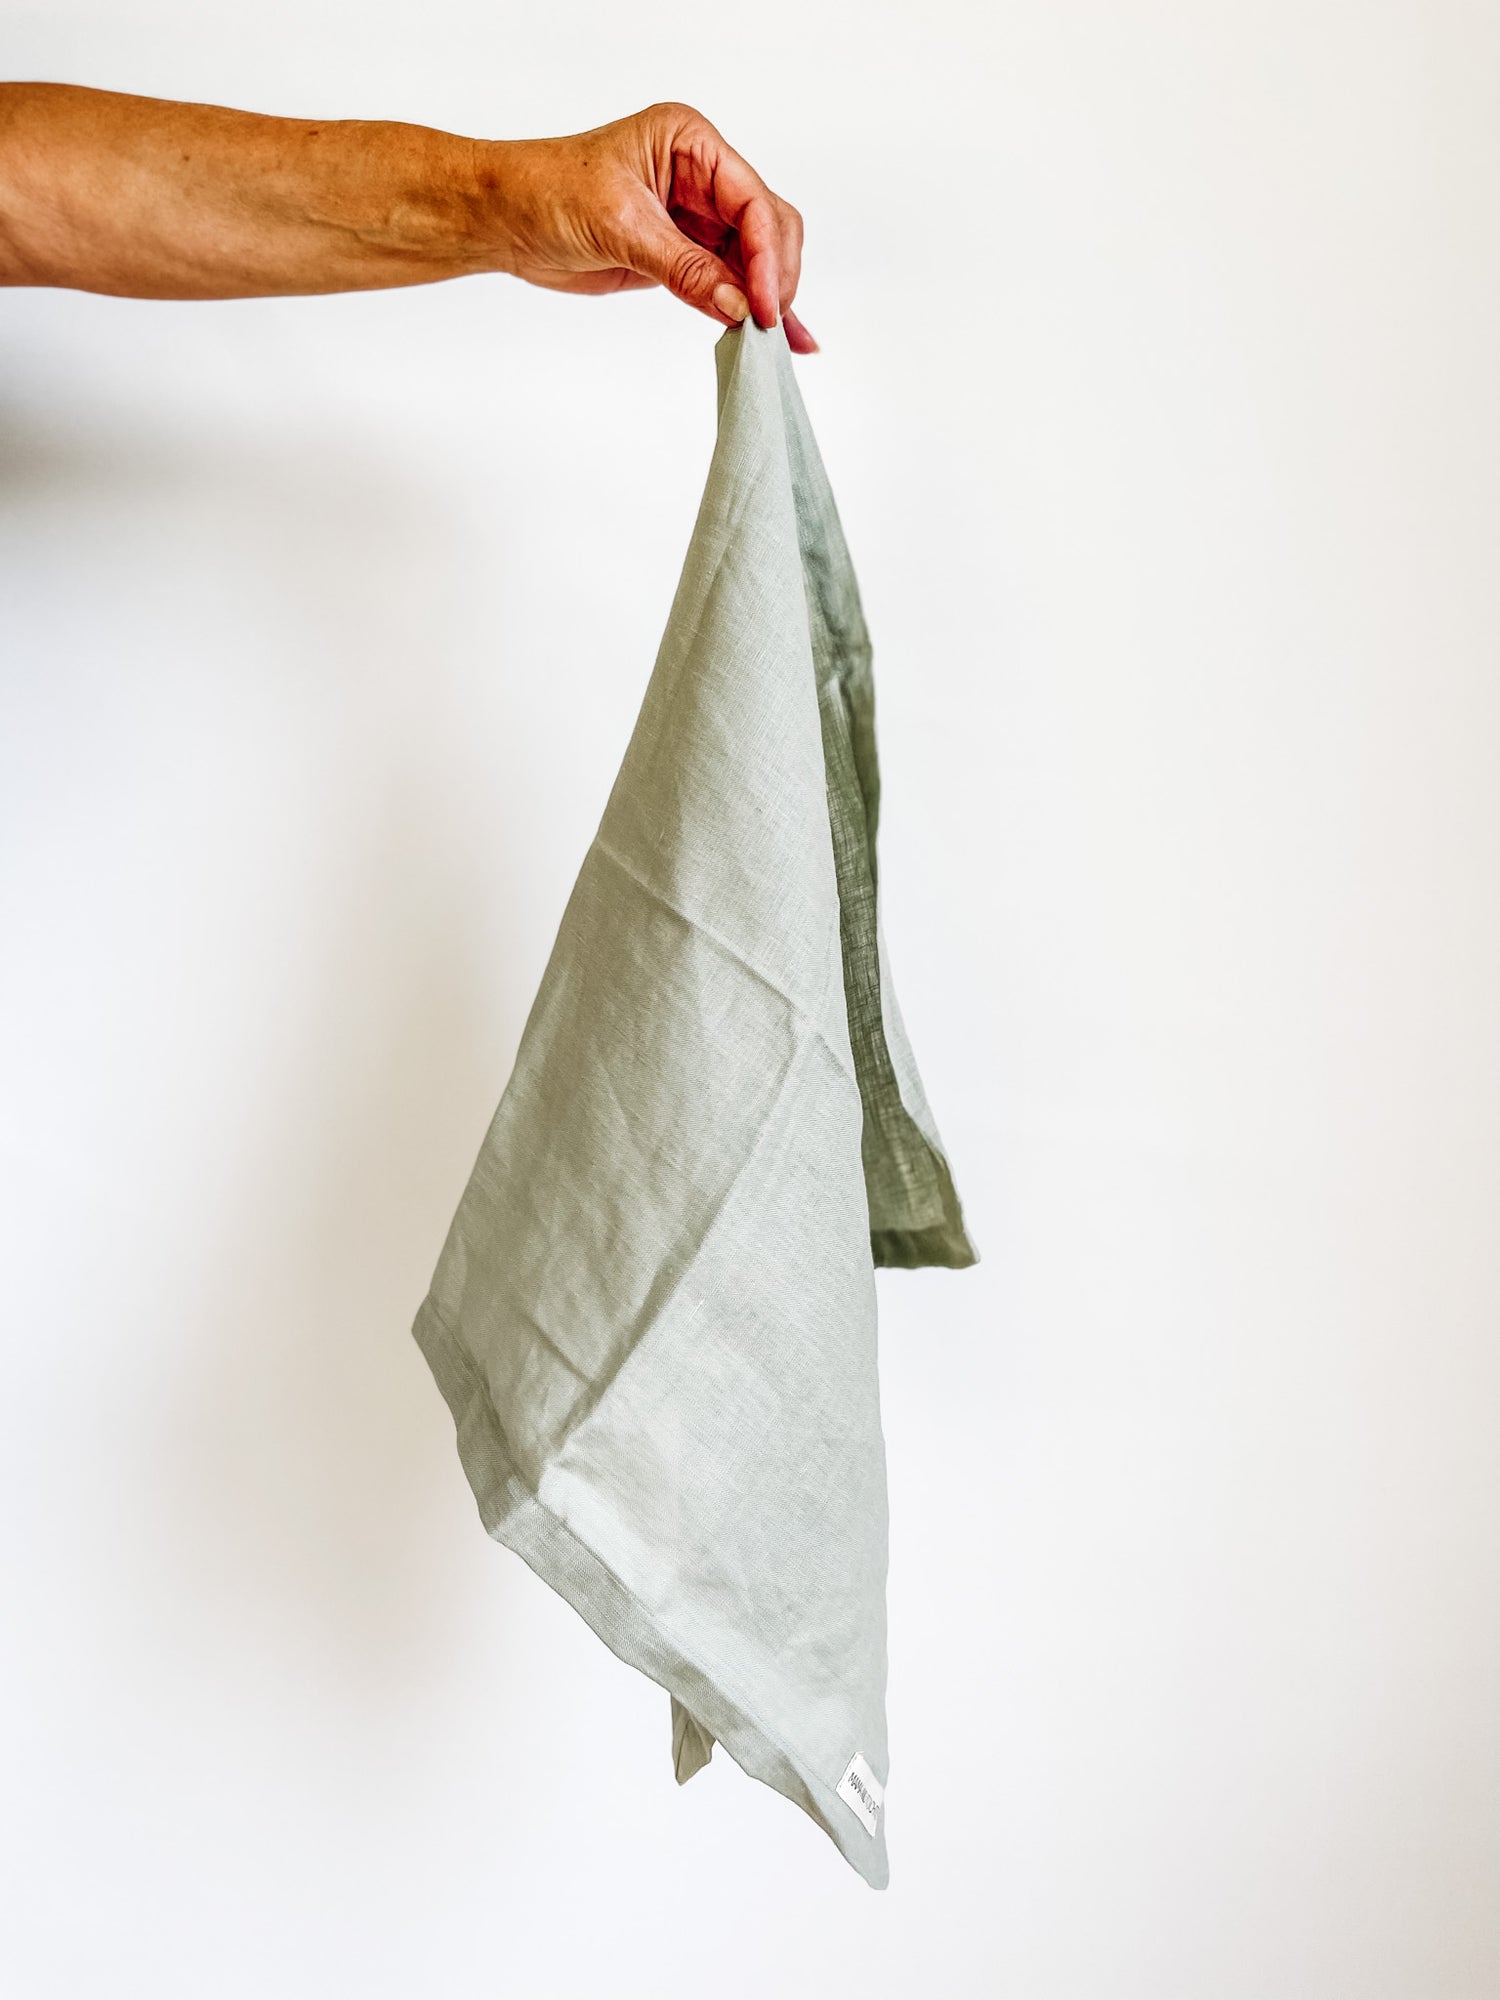 Haomy - Treviso Washed Linen Tea Towel - Celadon